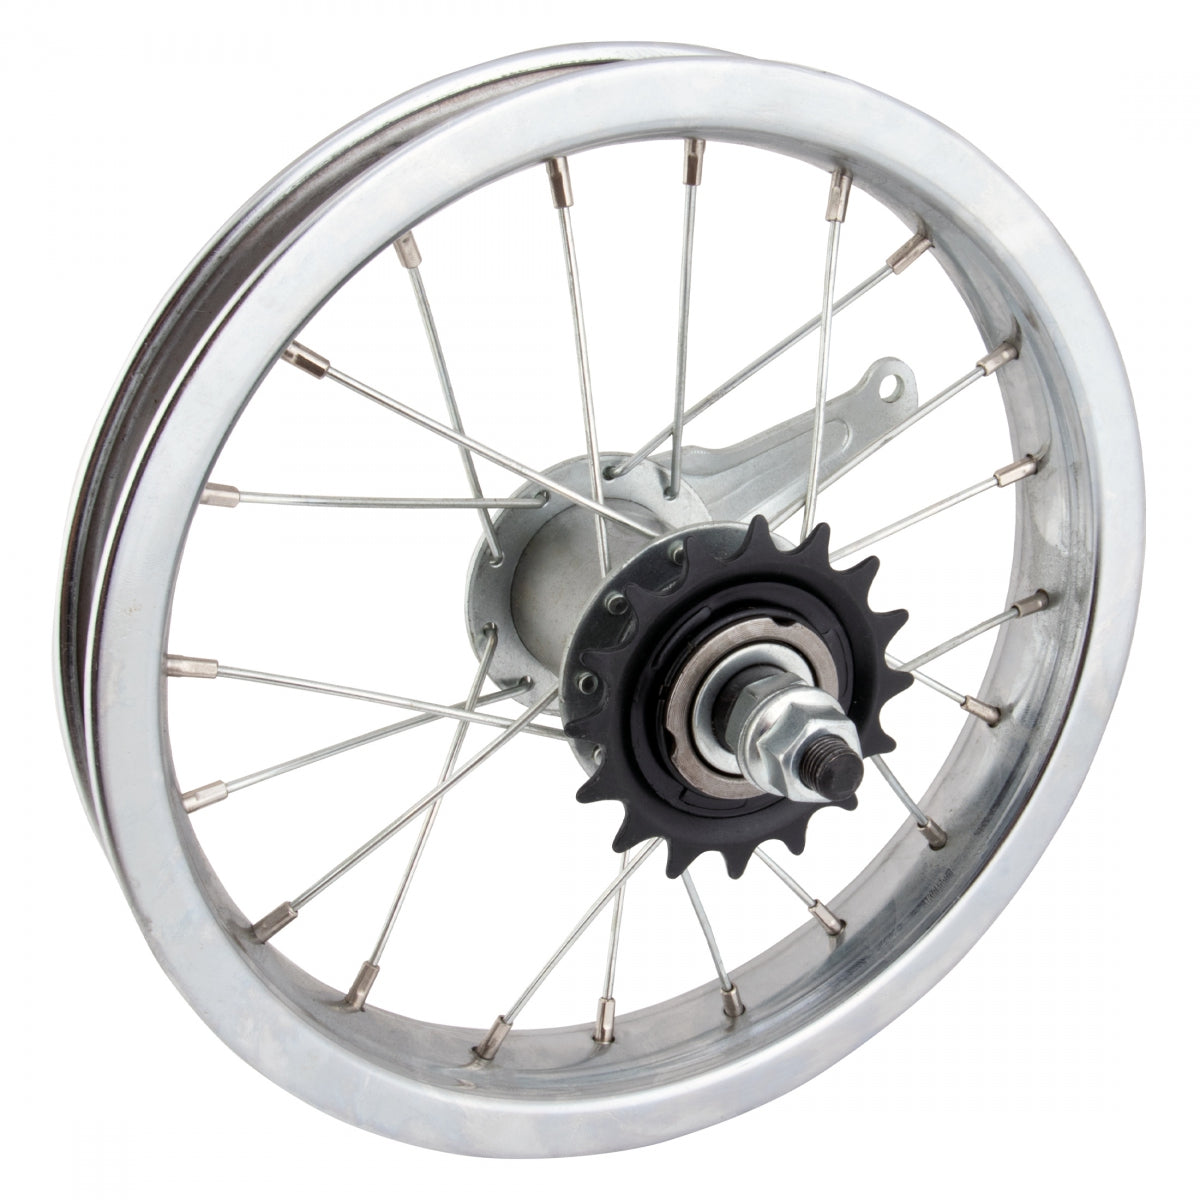 WheelMaster 12-1/2 x 2-1/4 Rear Bicycle Wheel, 20H, Steel, Bolt On, Silver